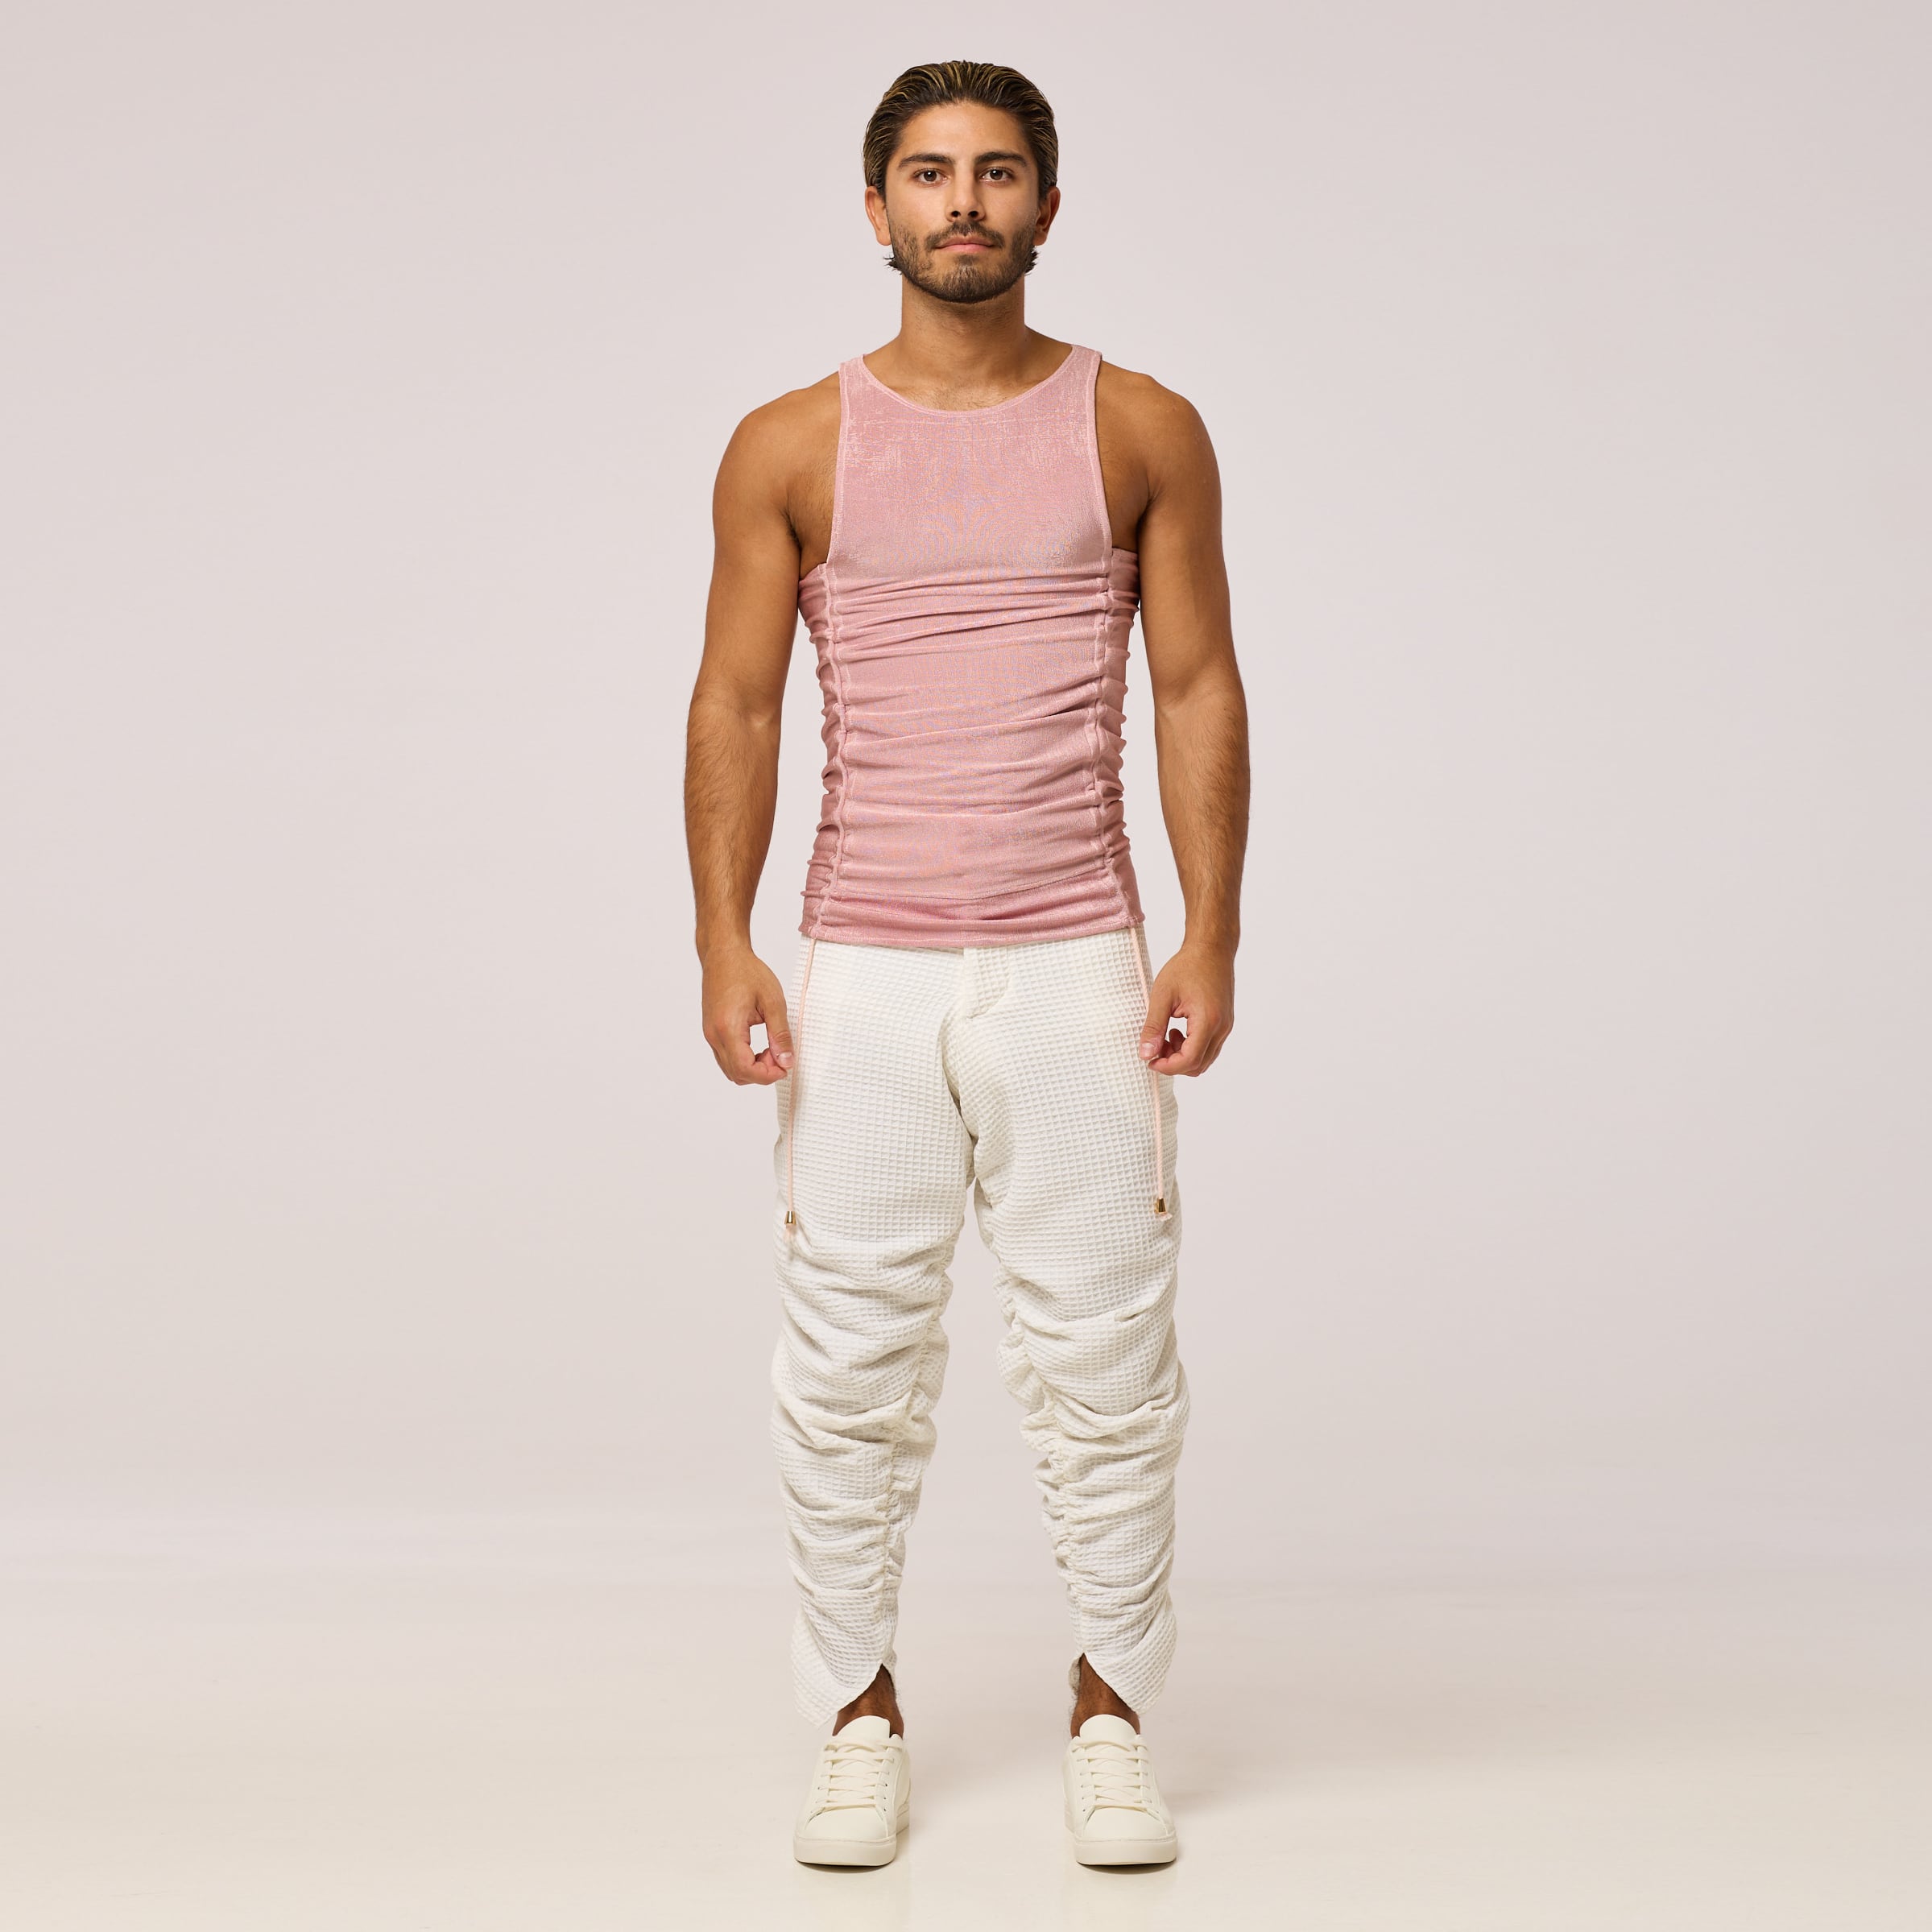 ZERØ London - Front Full Length view, Pink zero waste mens vest, zero waste fashion, designed & made in London